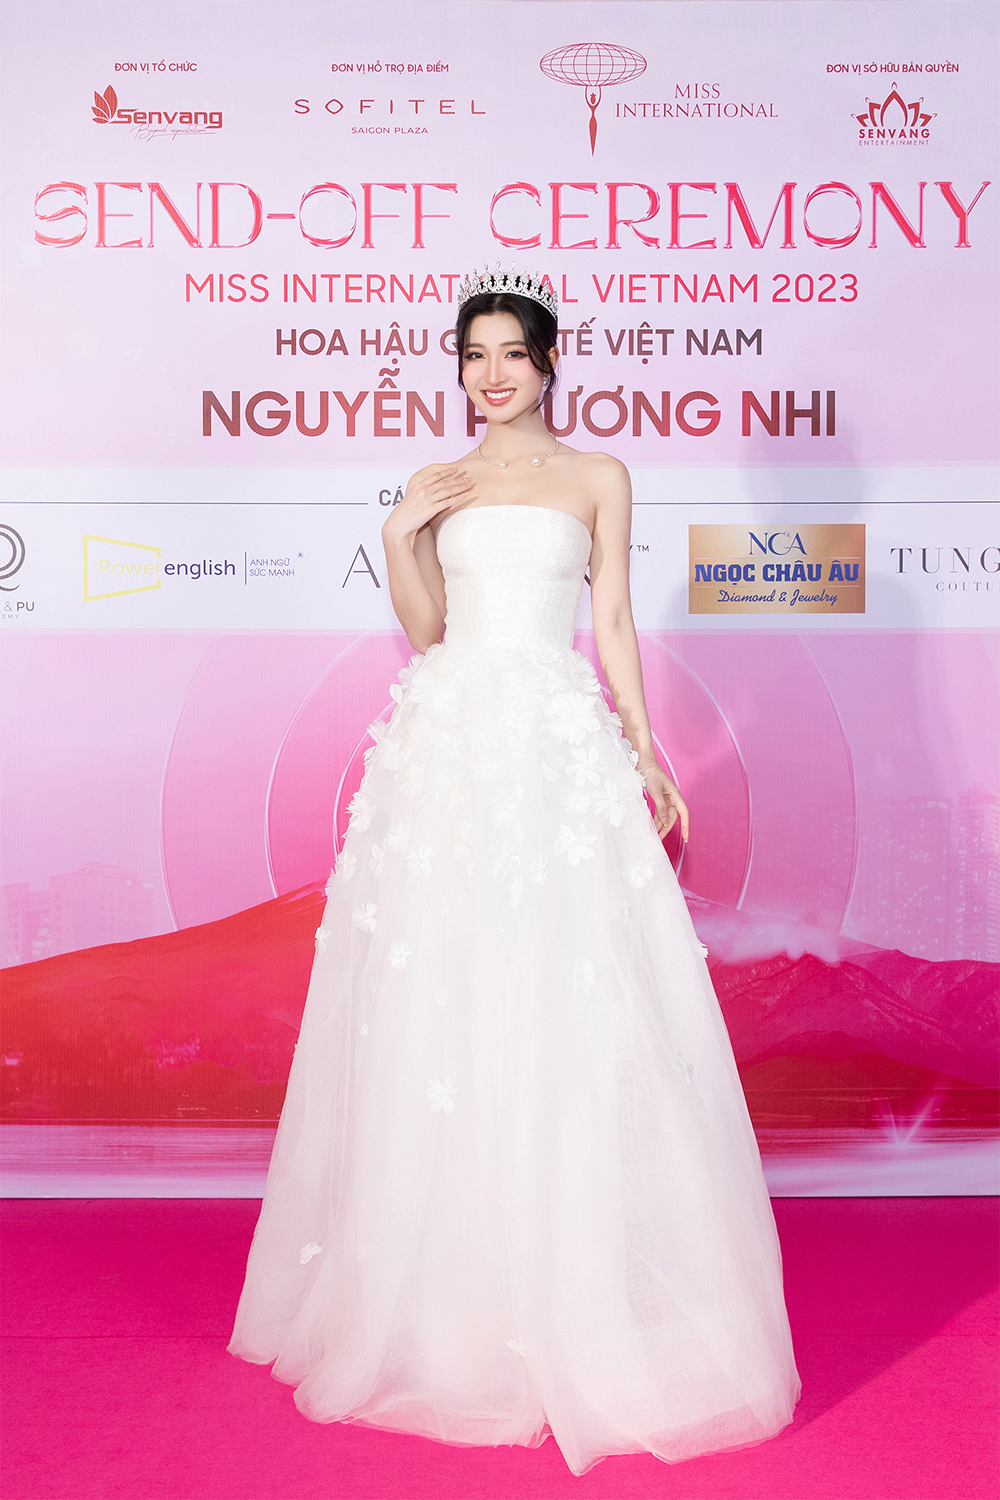 Harper's Bazaar_Miss International Việt Nam 2023 Phương Nhi_02